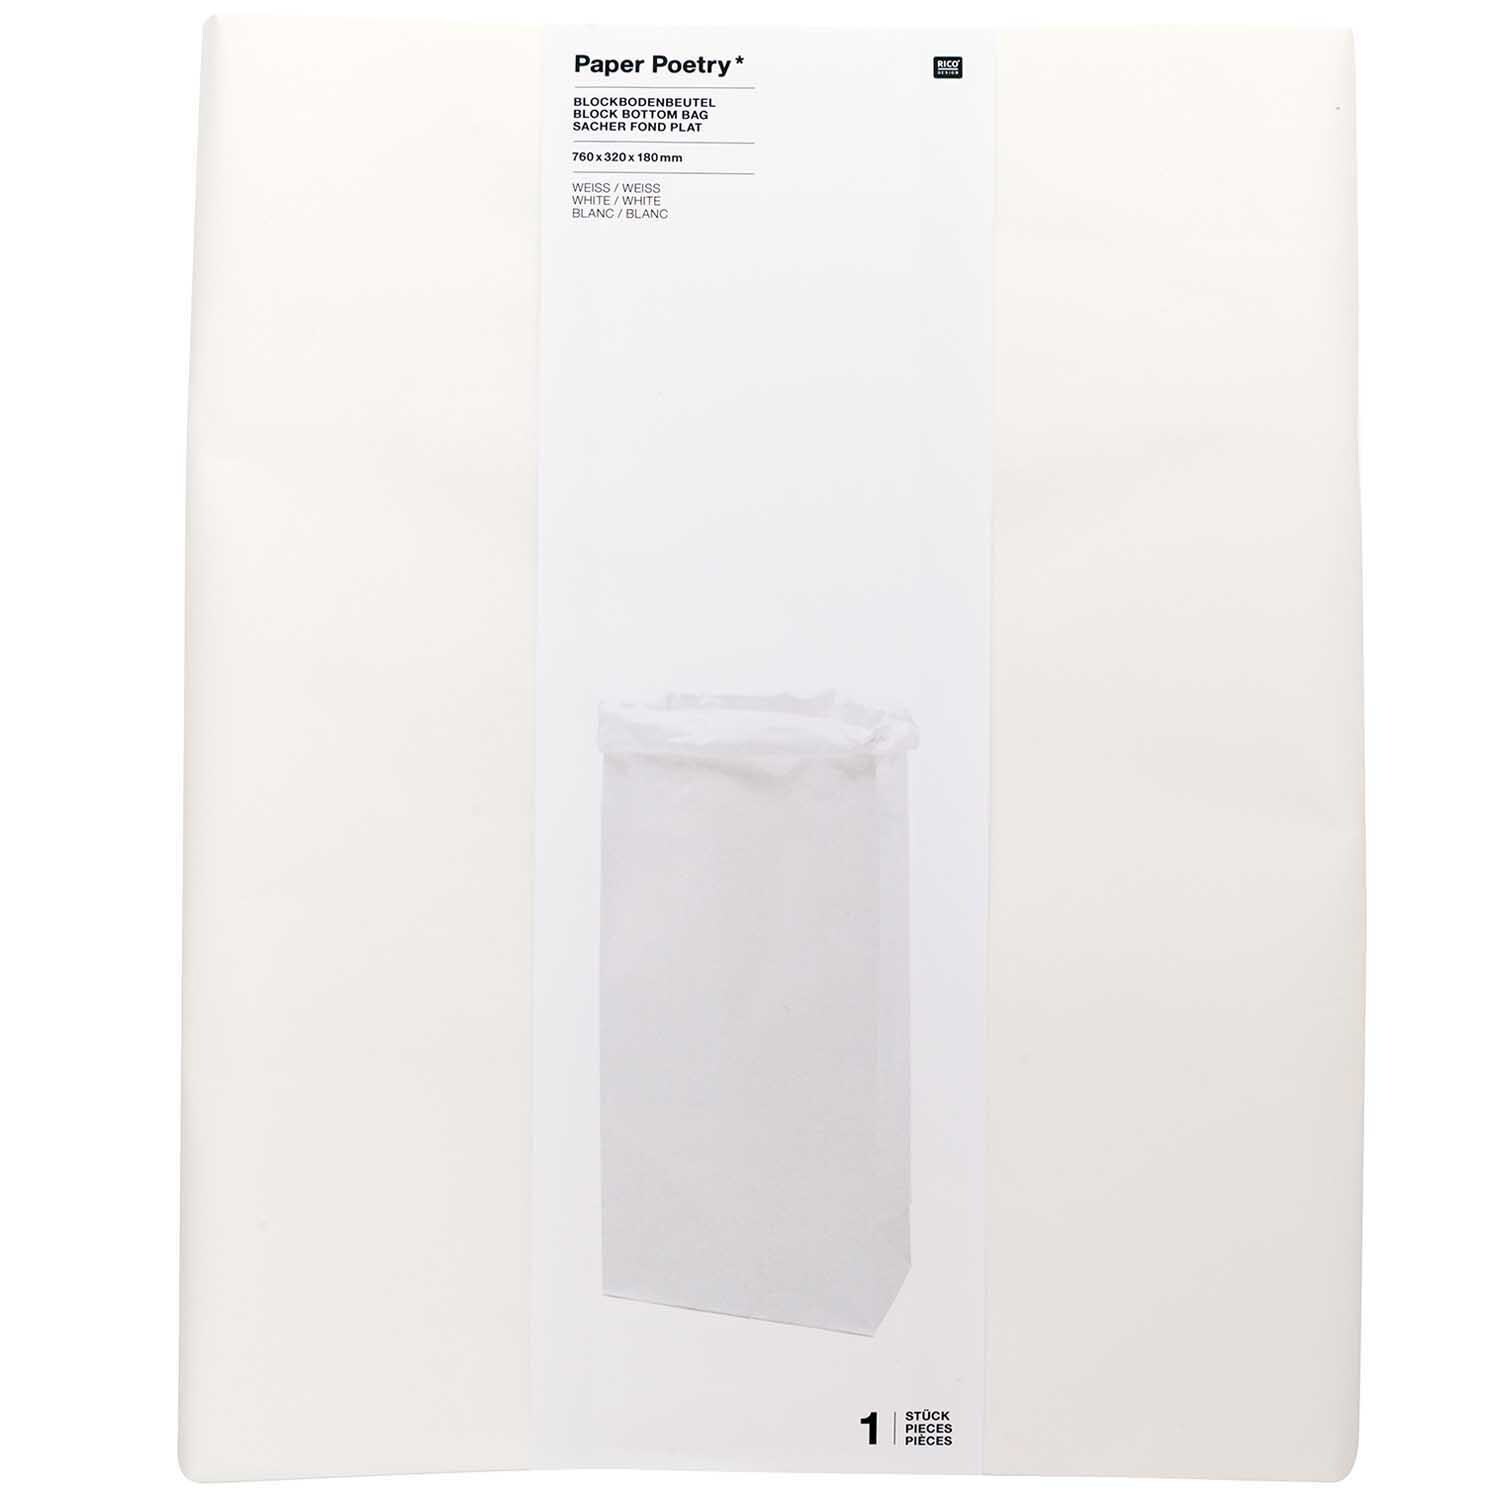 Paper Poetry Maxi-Blockbodenbeutel XL 76x32x18cm 1 Stück